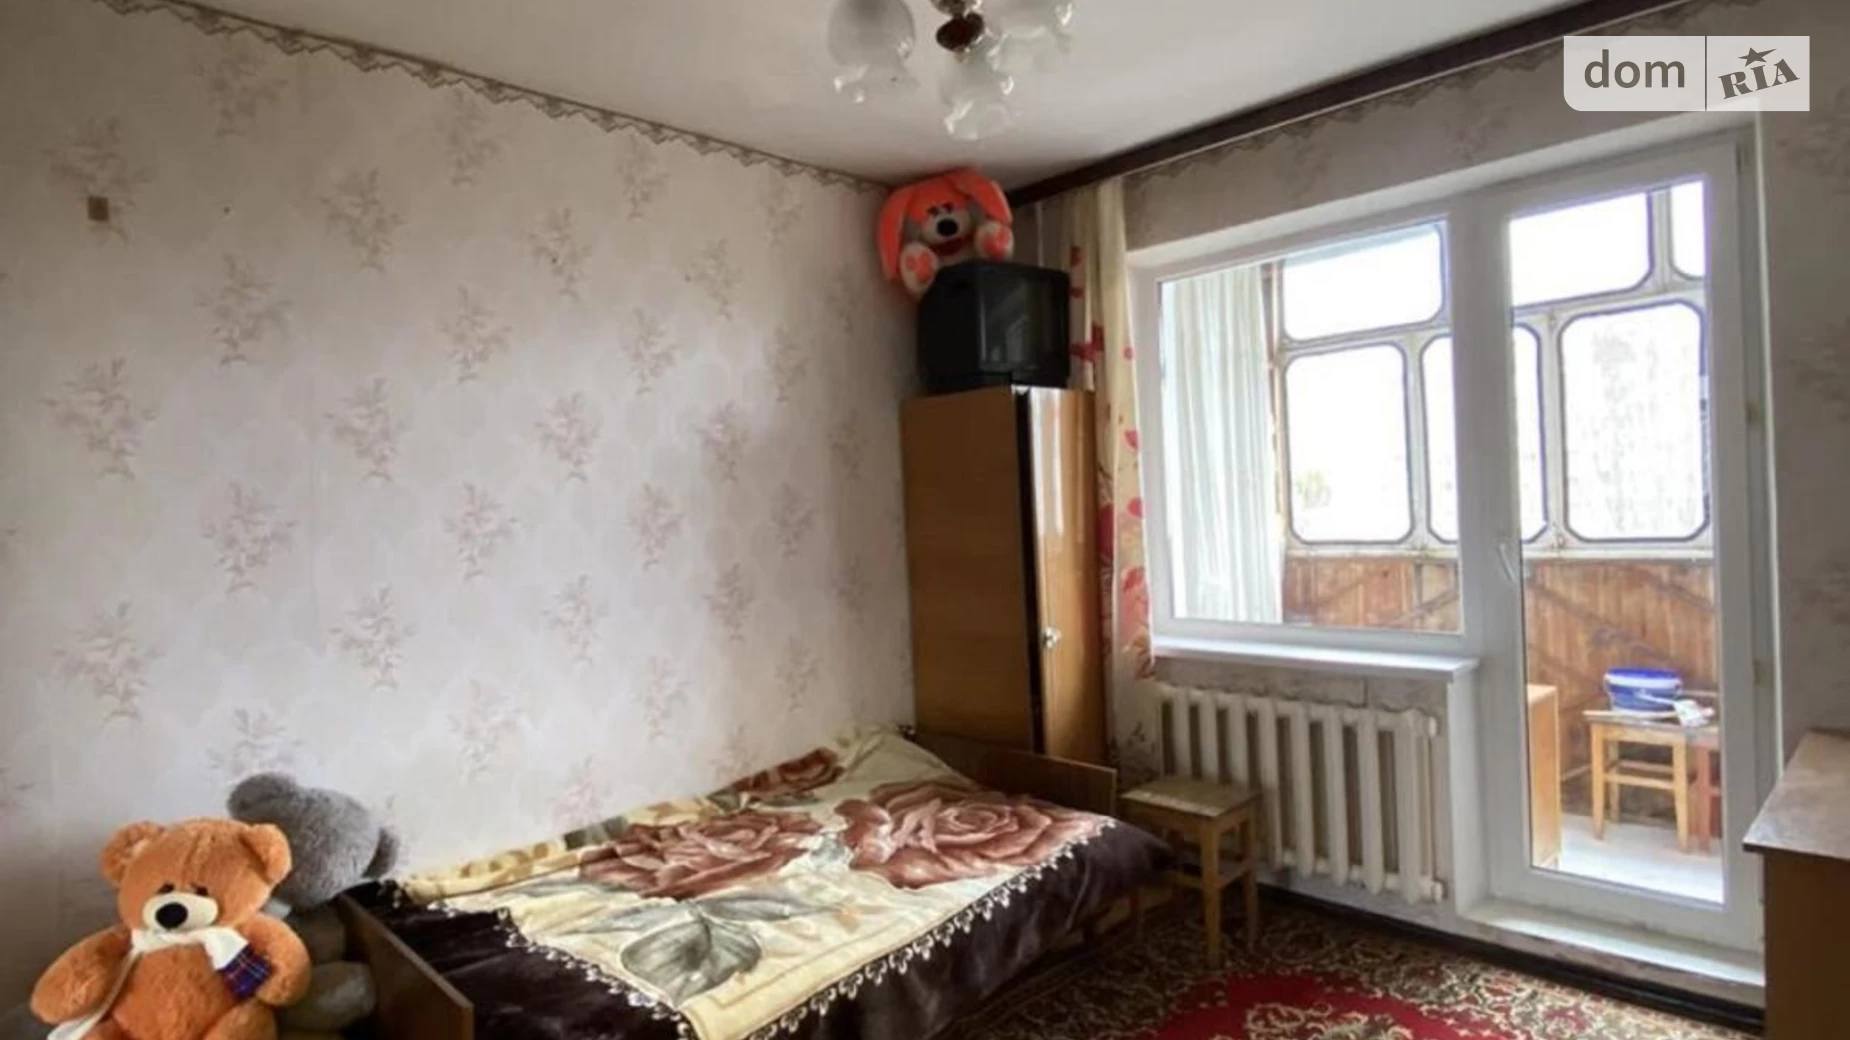 Продається 3-кімнатна квартира 72 кв. м у Хмельницькому, вул. Панаса Мирного - фото 3